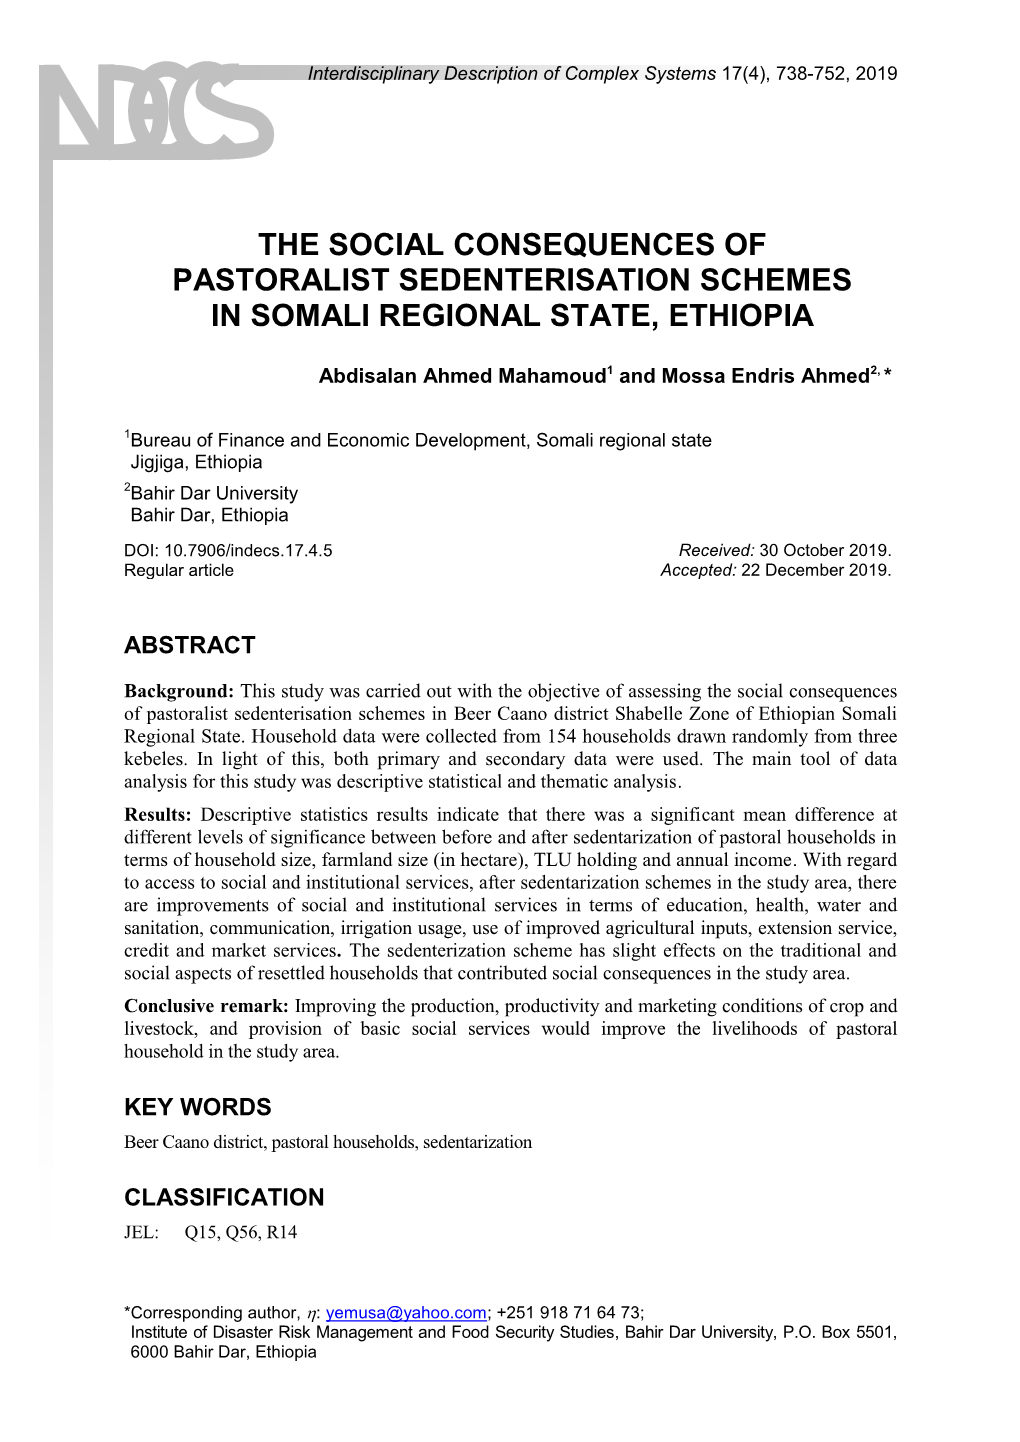 The Social Consequences of Pastoralist Sedenterisation Schemes in Somali Regional State, Ethiopia